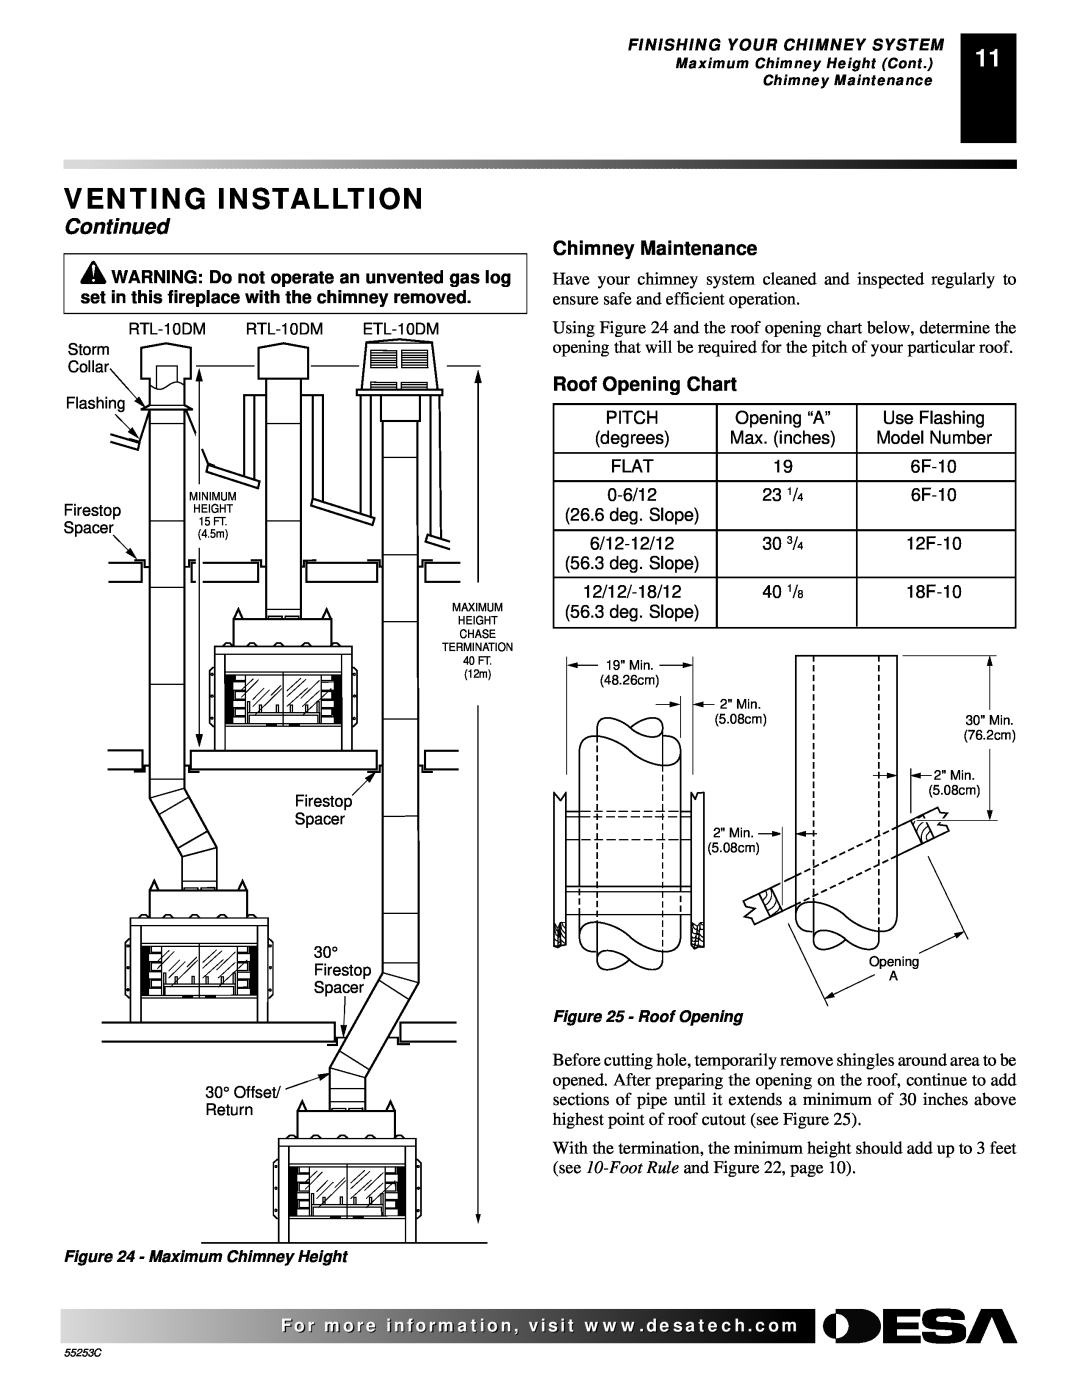 Desa V3610ST manual Venting Installtion, Continued, Chimney Maintenance, Roof Opening Chart 